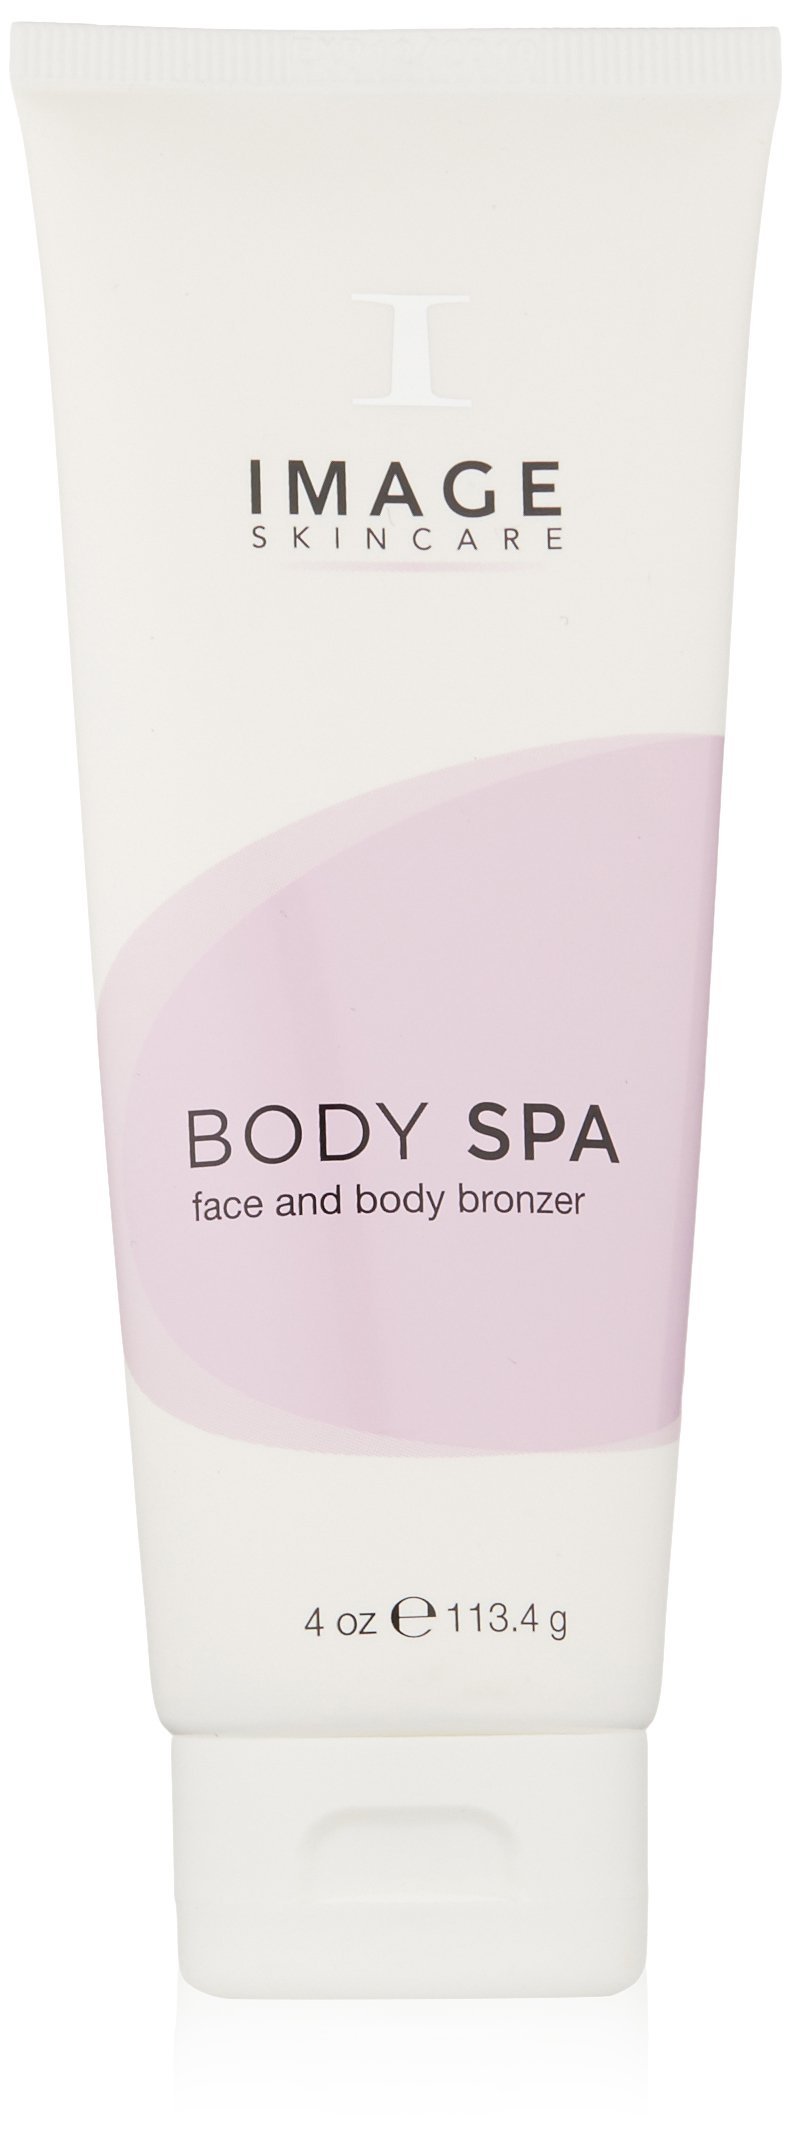 IMAGE Skincare Body Spa Face and Body Bronzer,4 oz - BeesActive Australia